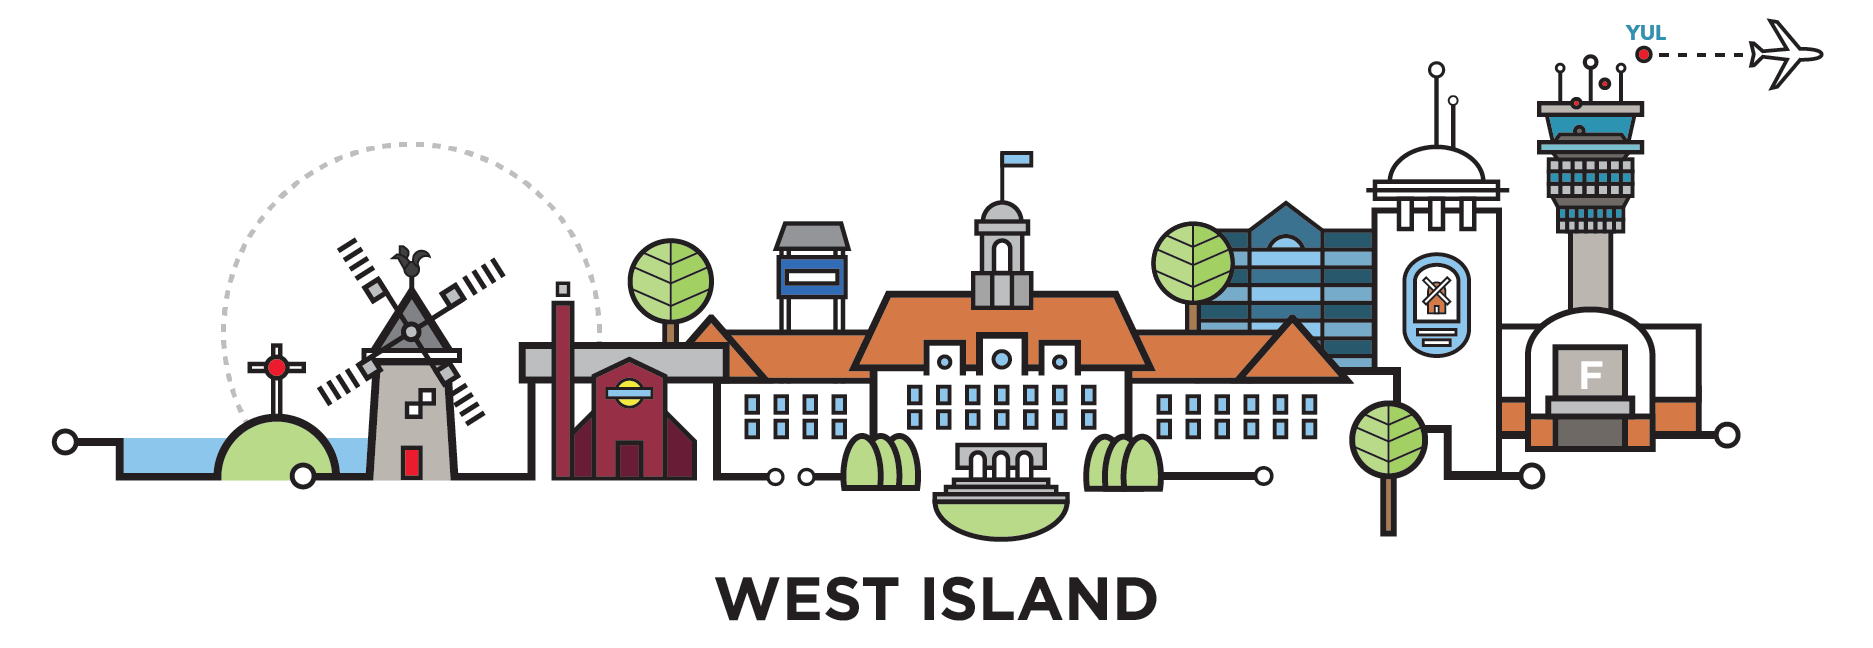 mtl-west-island-cityline-illustration-by-loogart